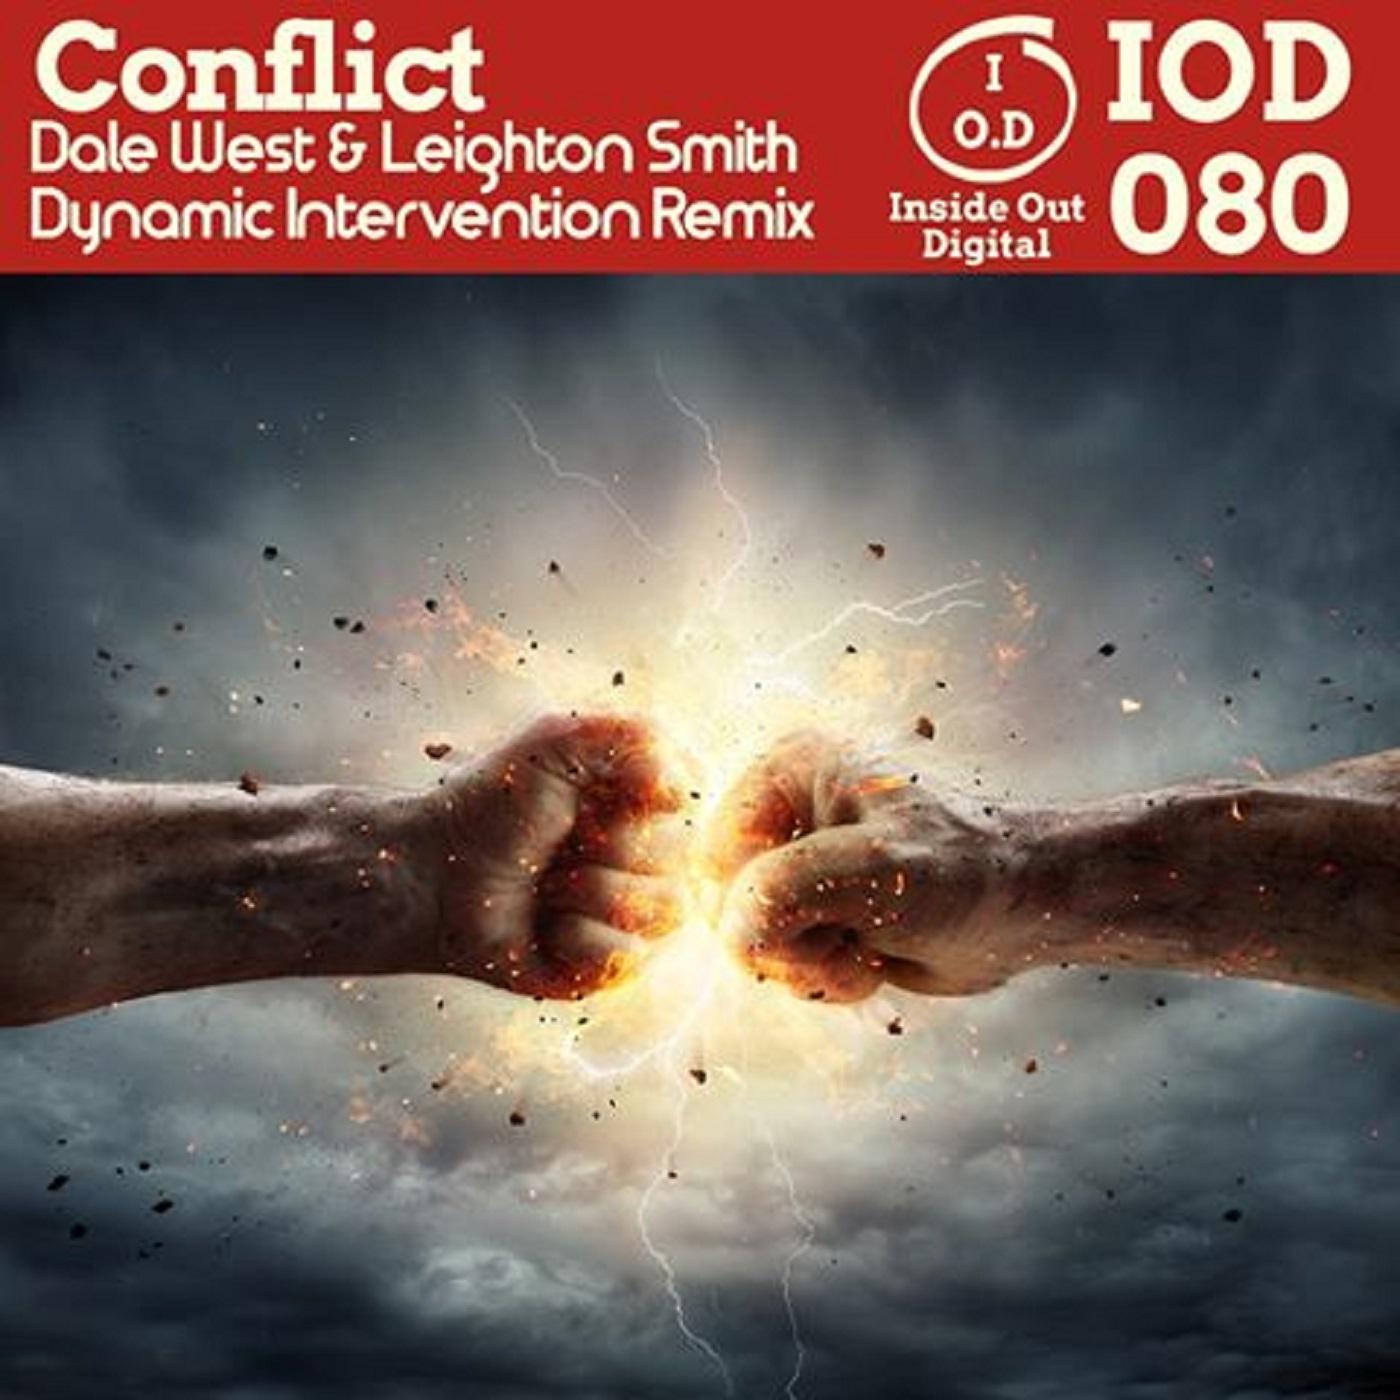 Dale West - Conflict (Dynamic Intervention Remix)